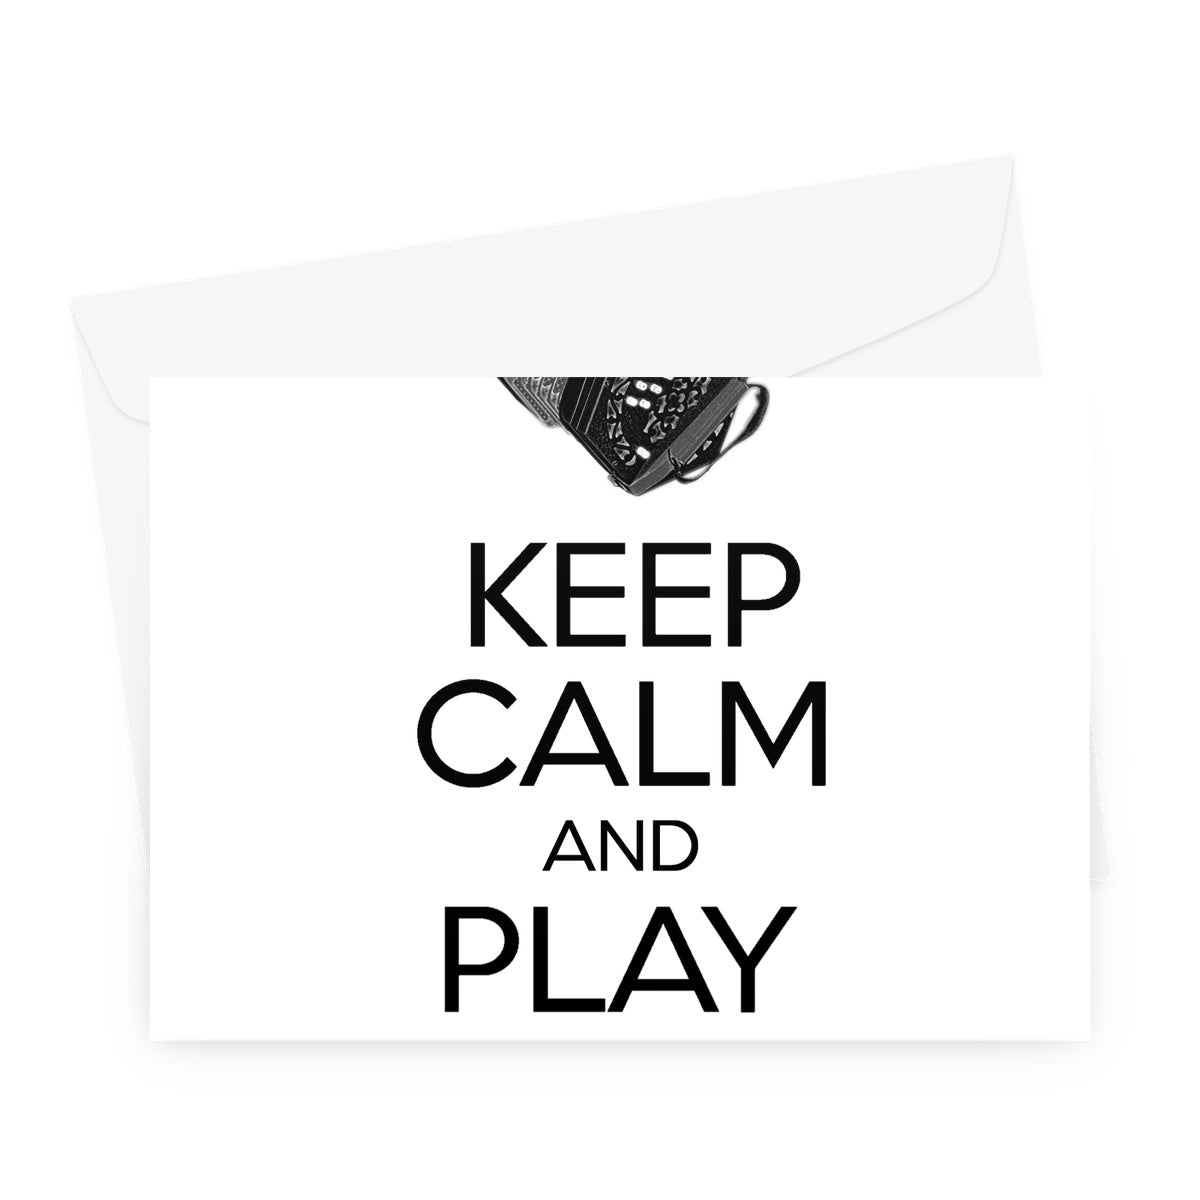 Keep Calm & Play Anglo Concertina Greeting Card